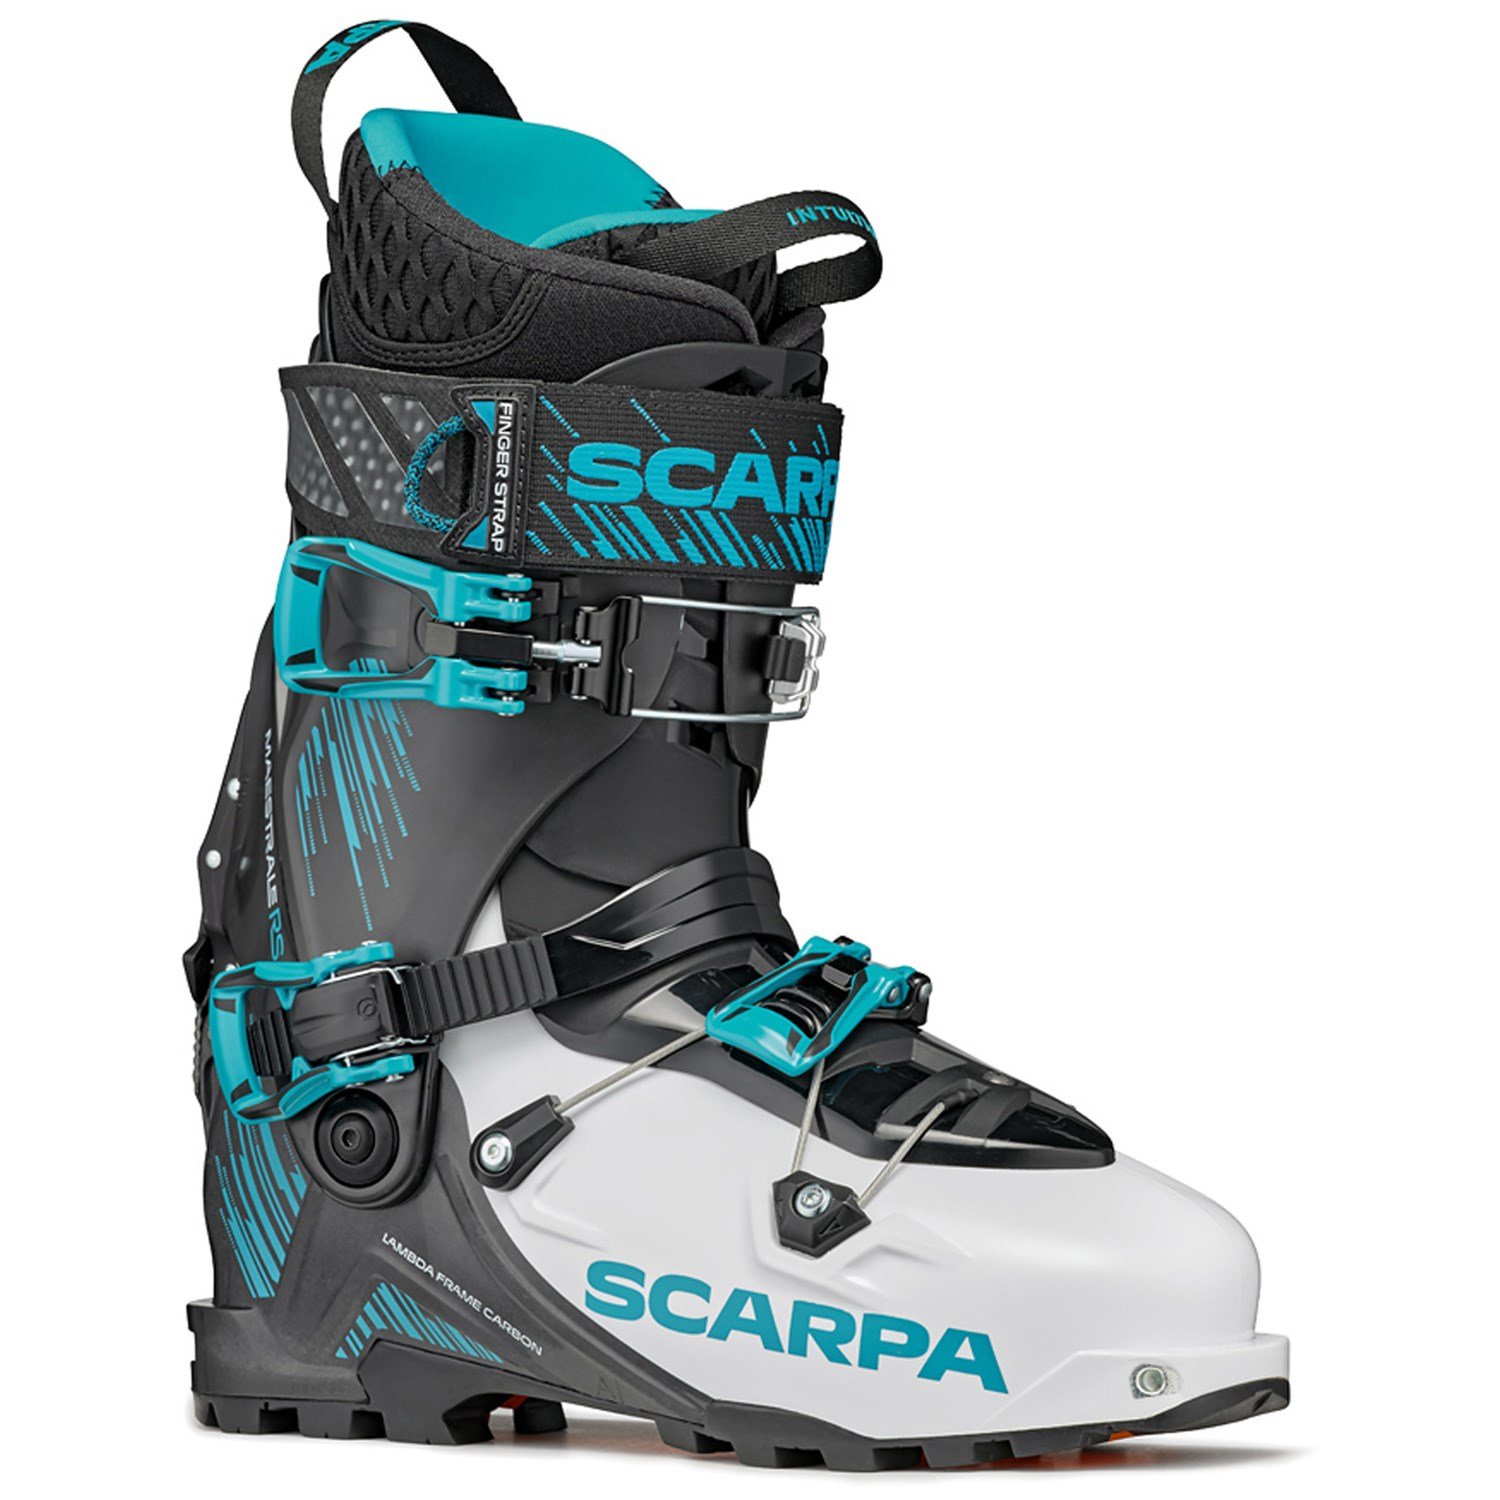 New Scarpa Maestrale Alpine Touring AT Ski Boots Choose Size 27.5-28.5 